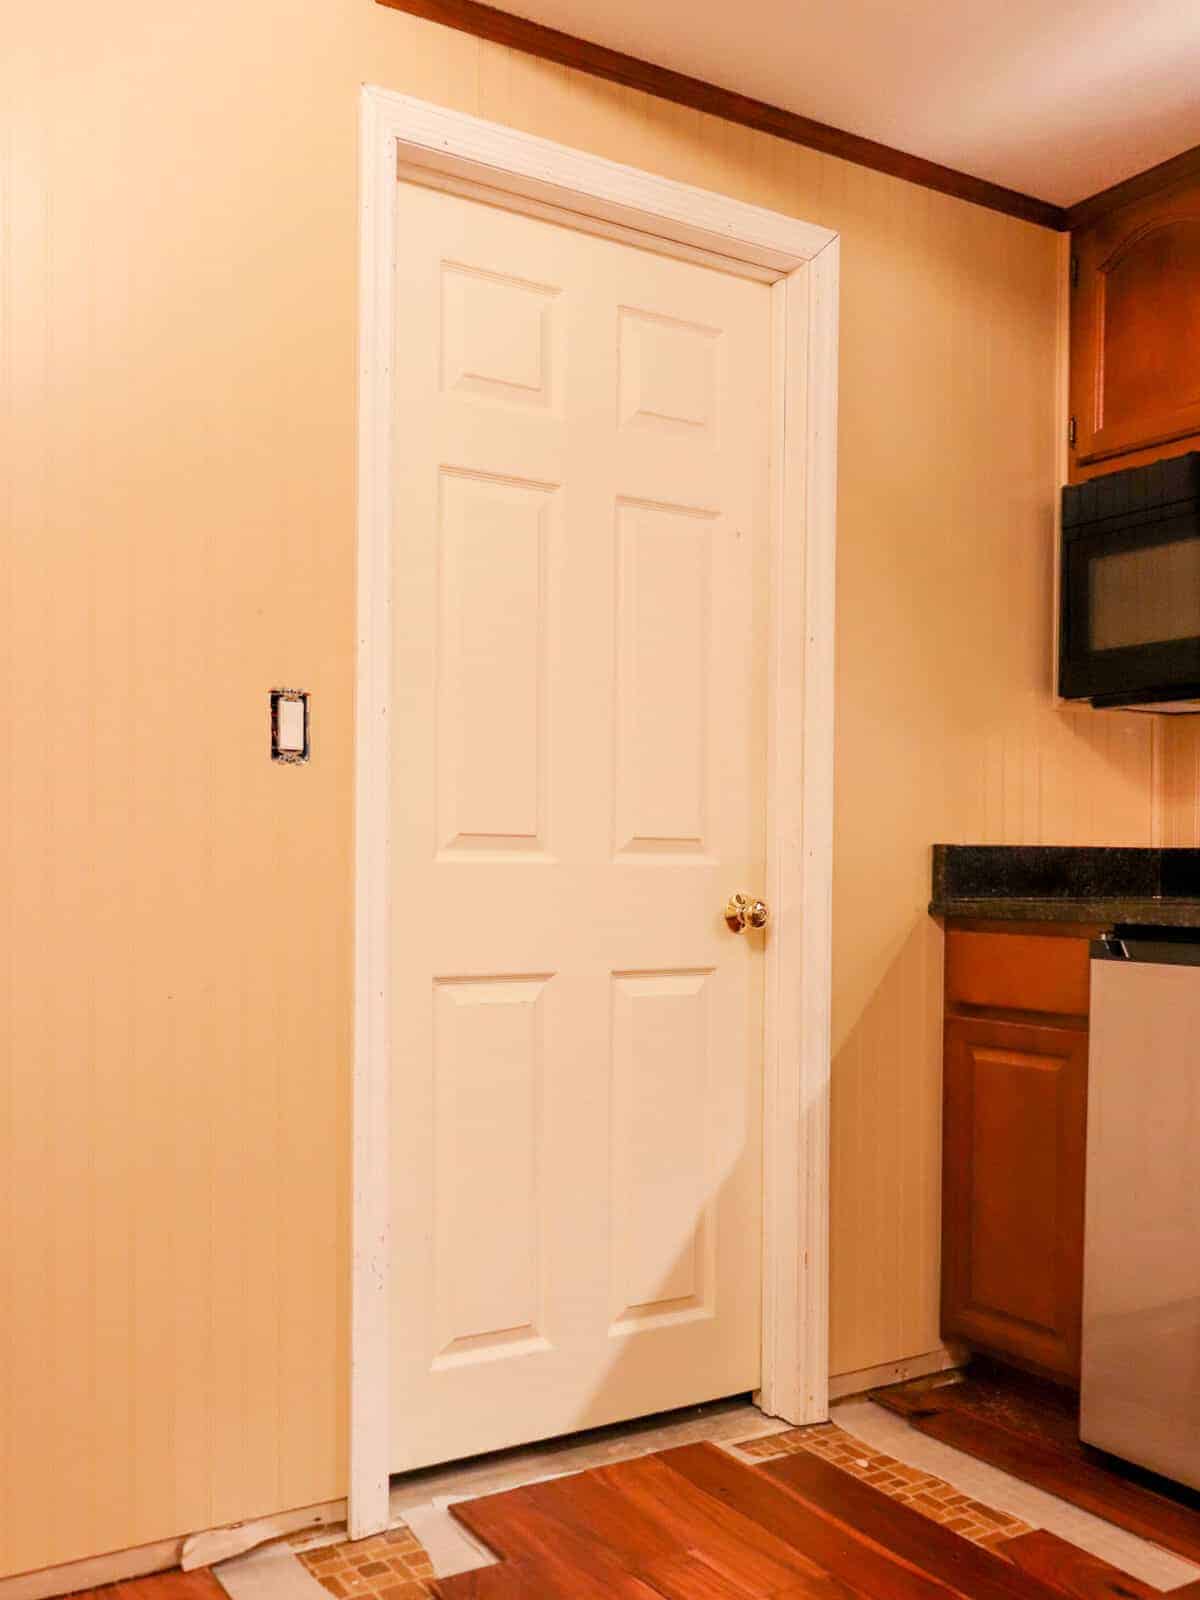 Moving an Interior Door